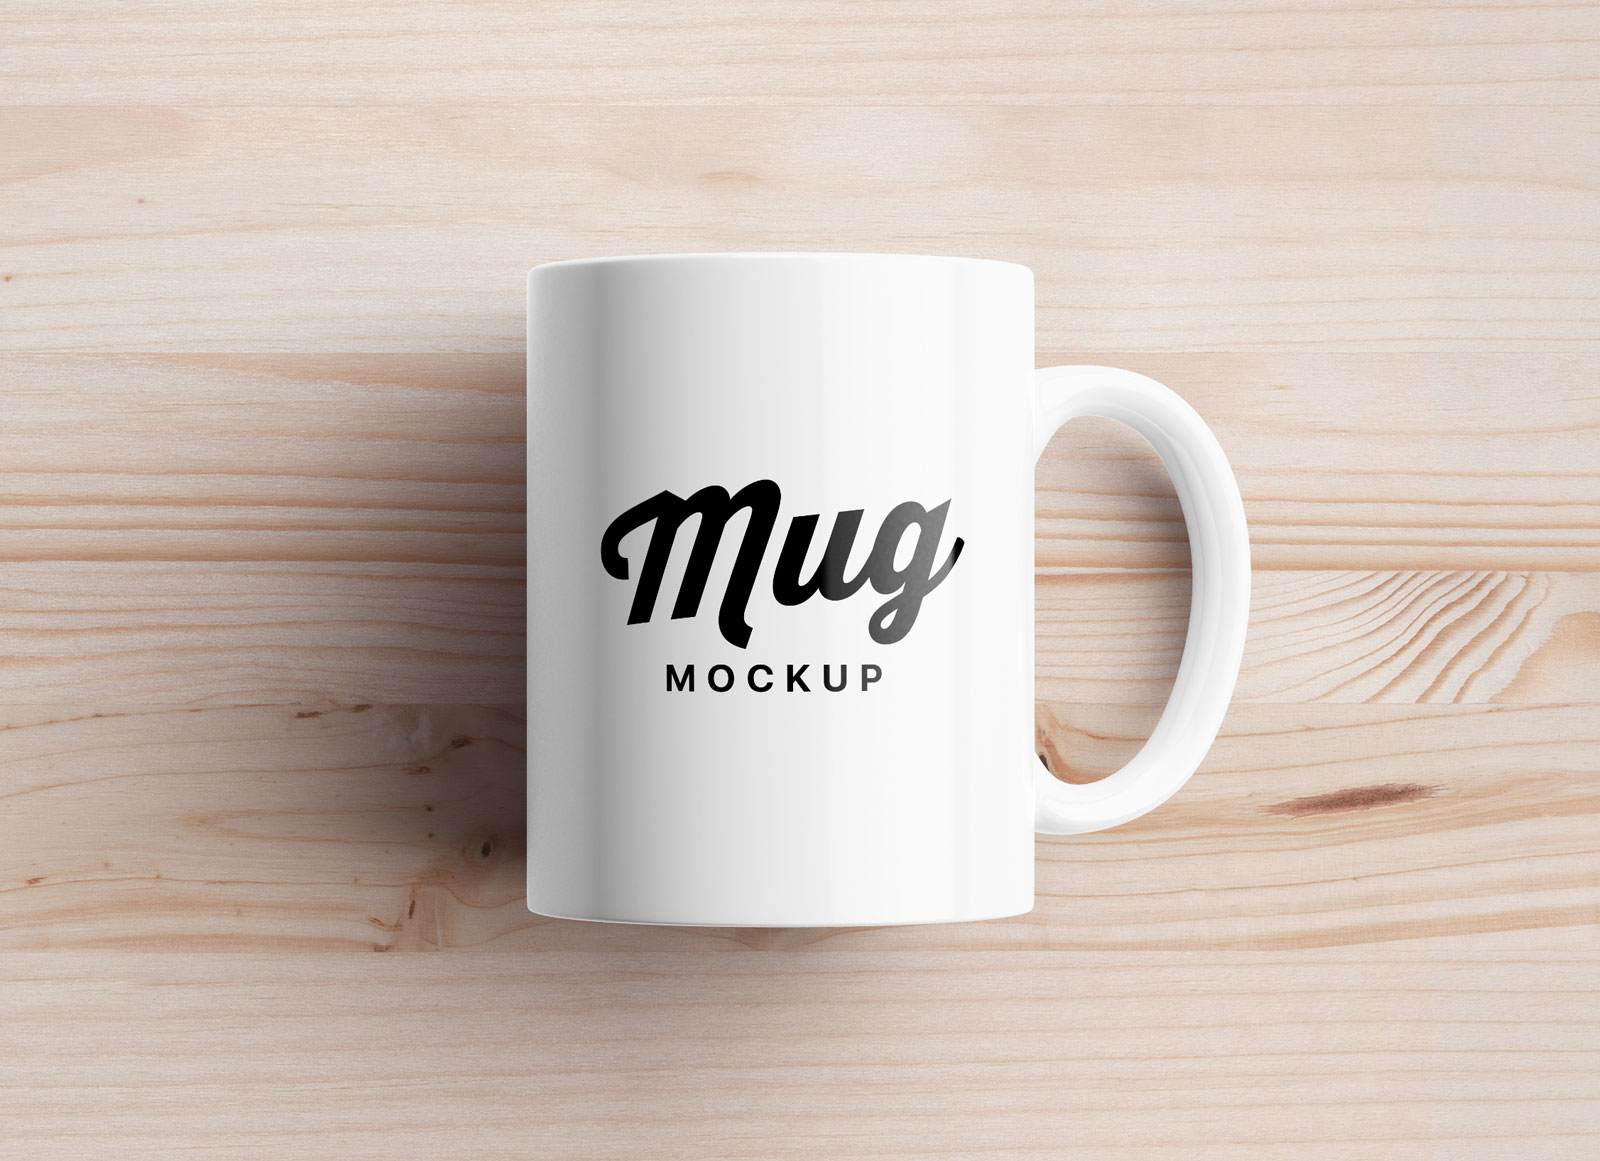 Mug mockup free psd download Idea